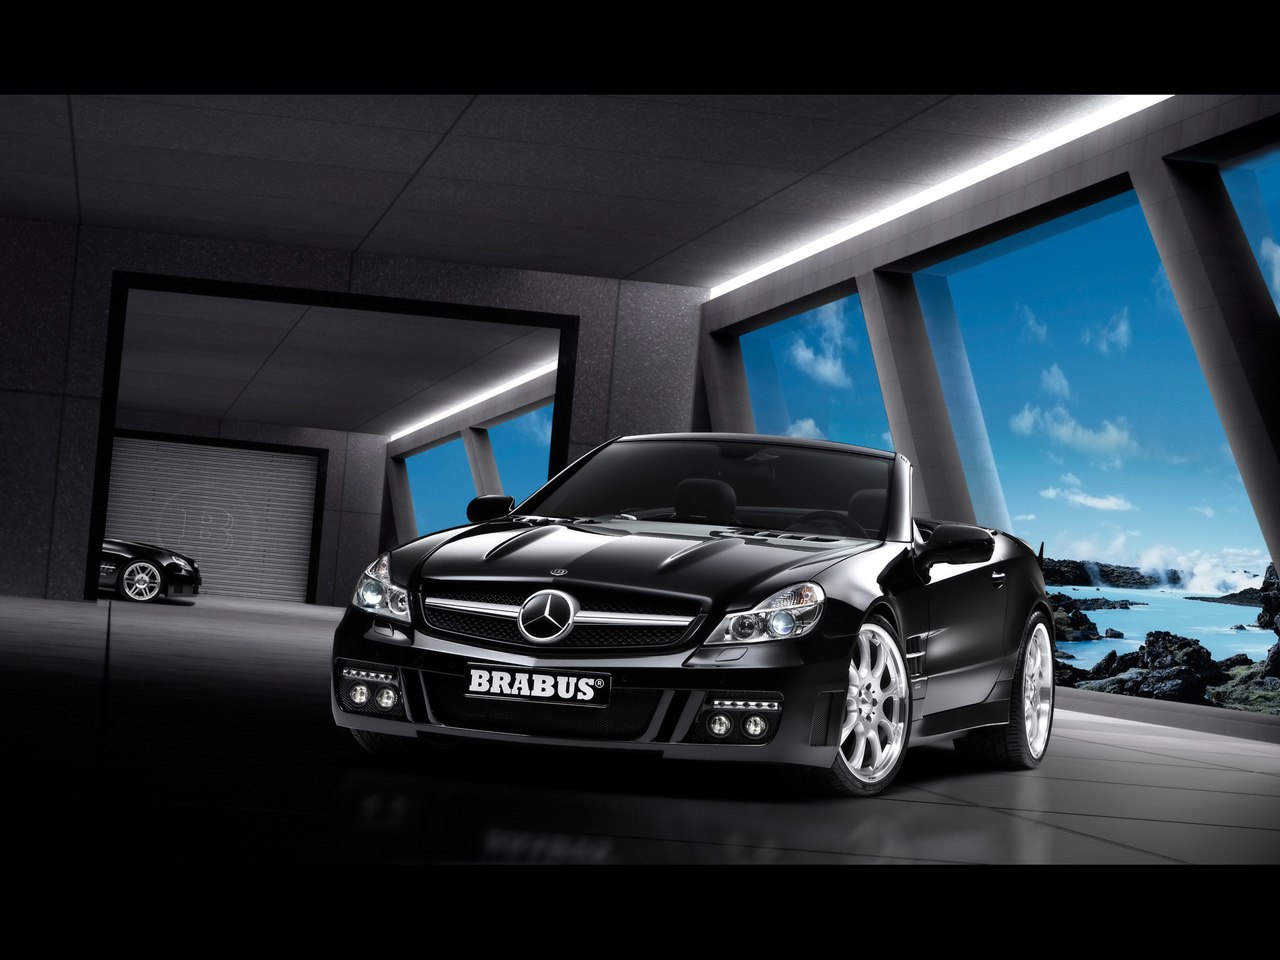 14471035422008-Brabus-Mercedes-Benz-SL-Class-Front-Angle-Tilt-1280x960